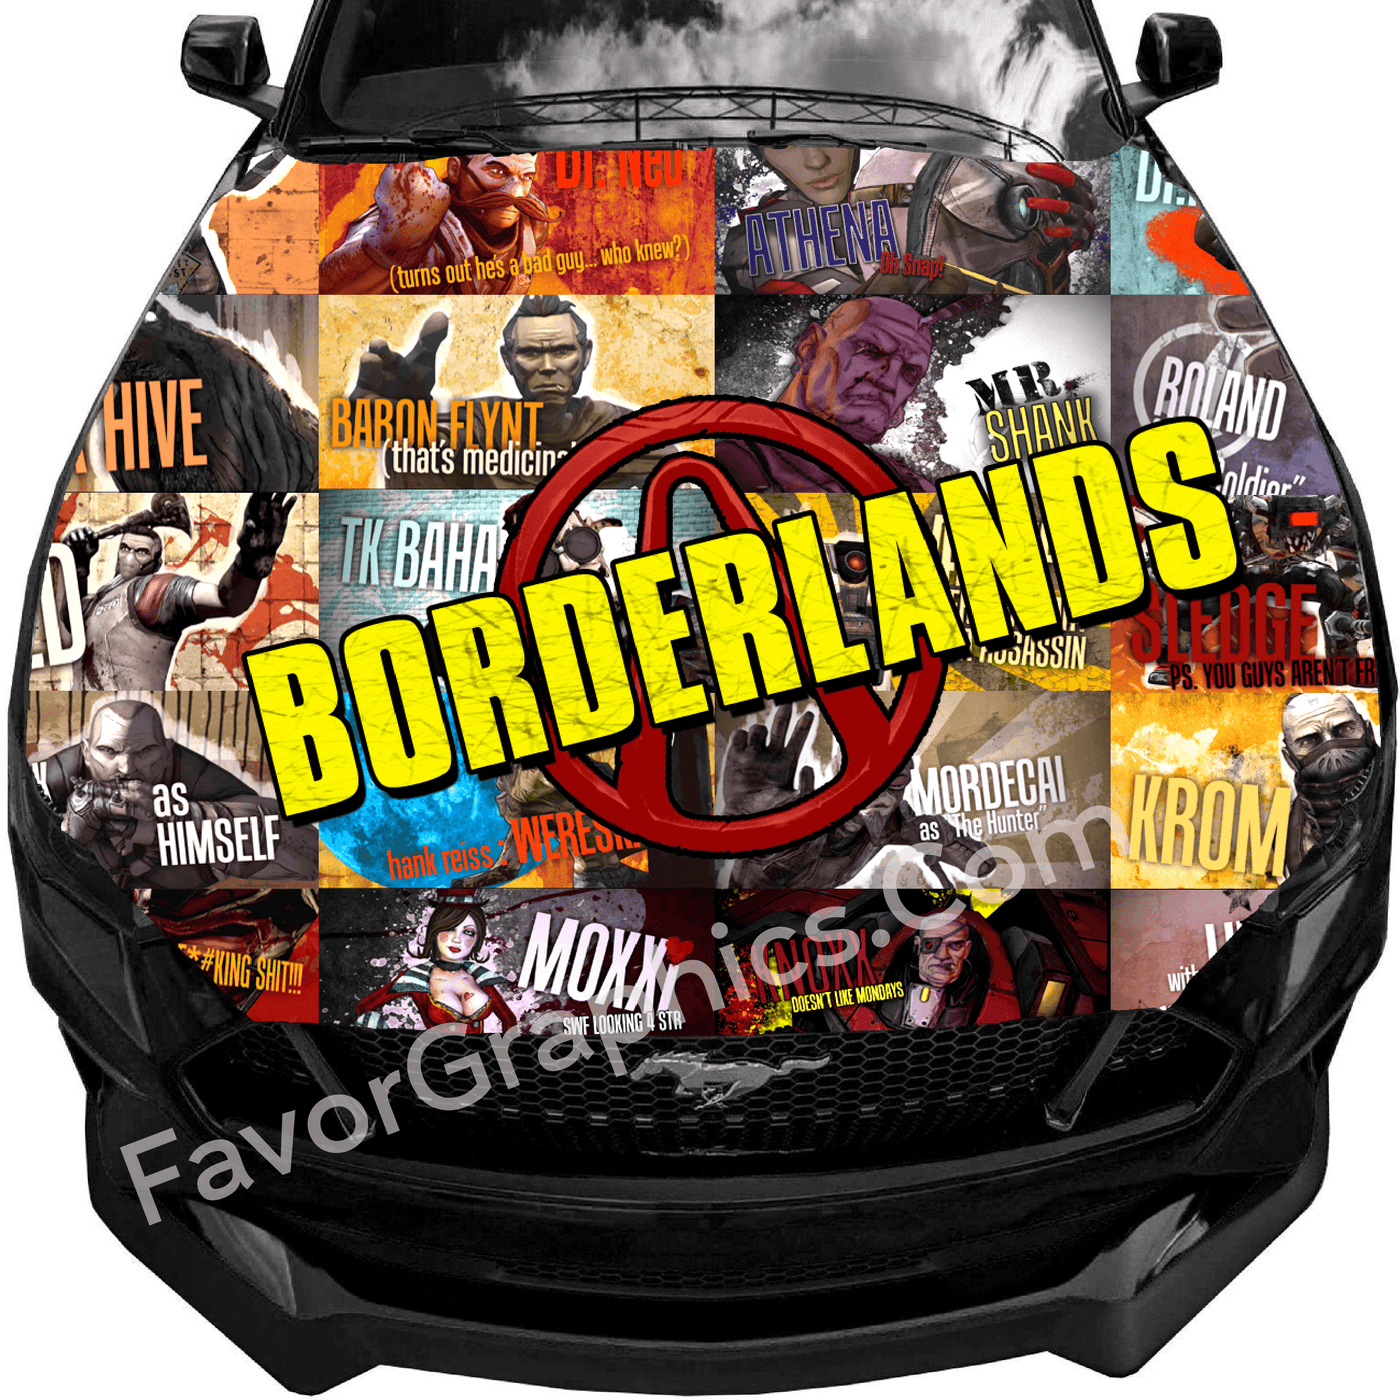 Borderlands Car Decal Sticker Vinyl Hood Wrap